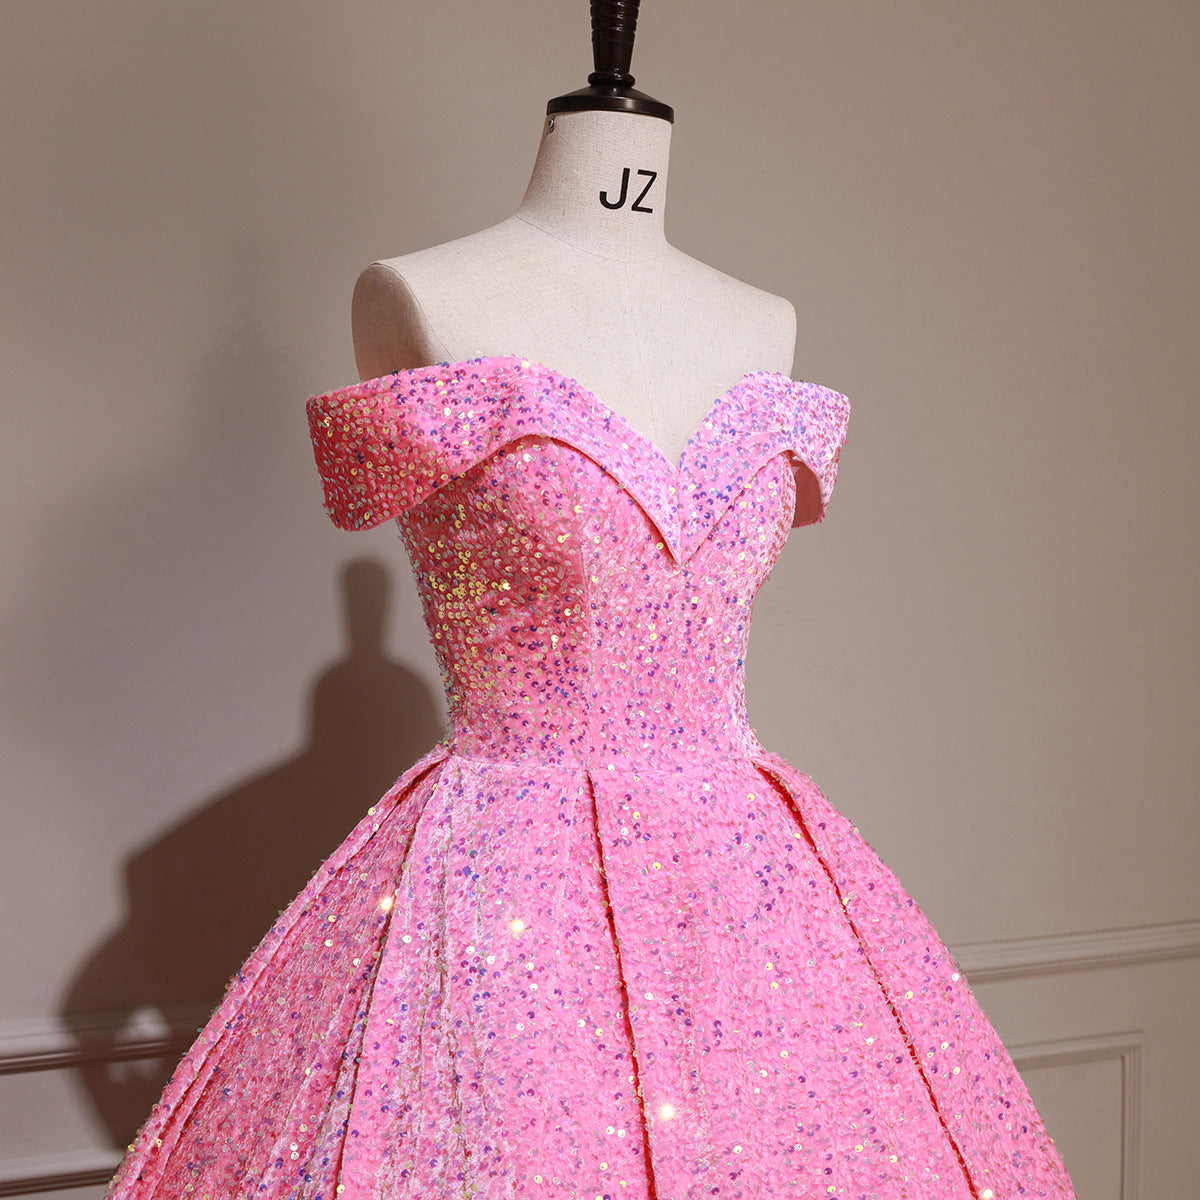 Pink Ball Gown Long Prom Dress Sweet 15/16 Dress